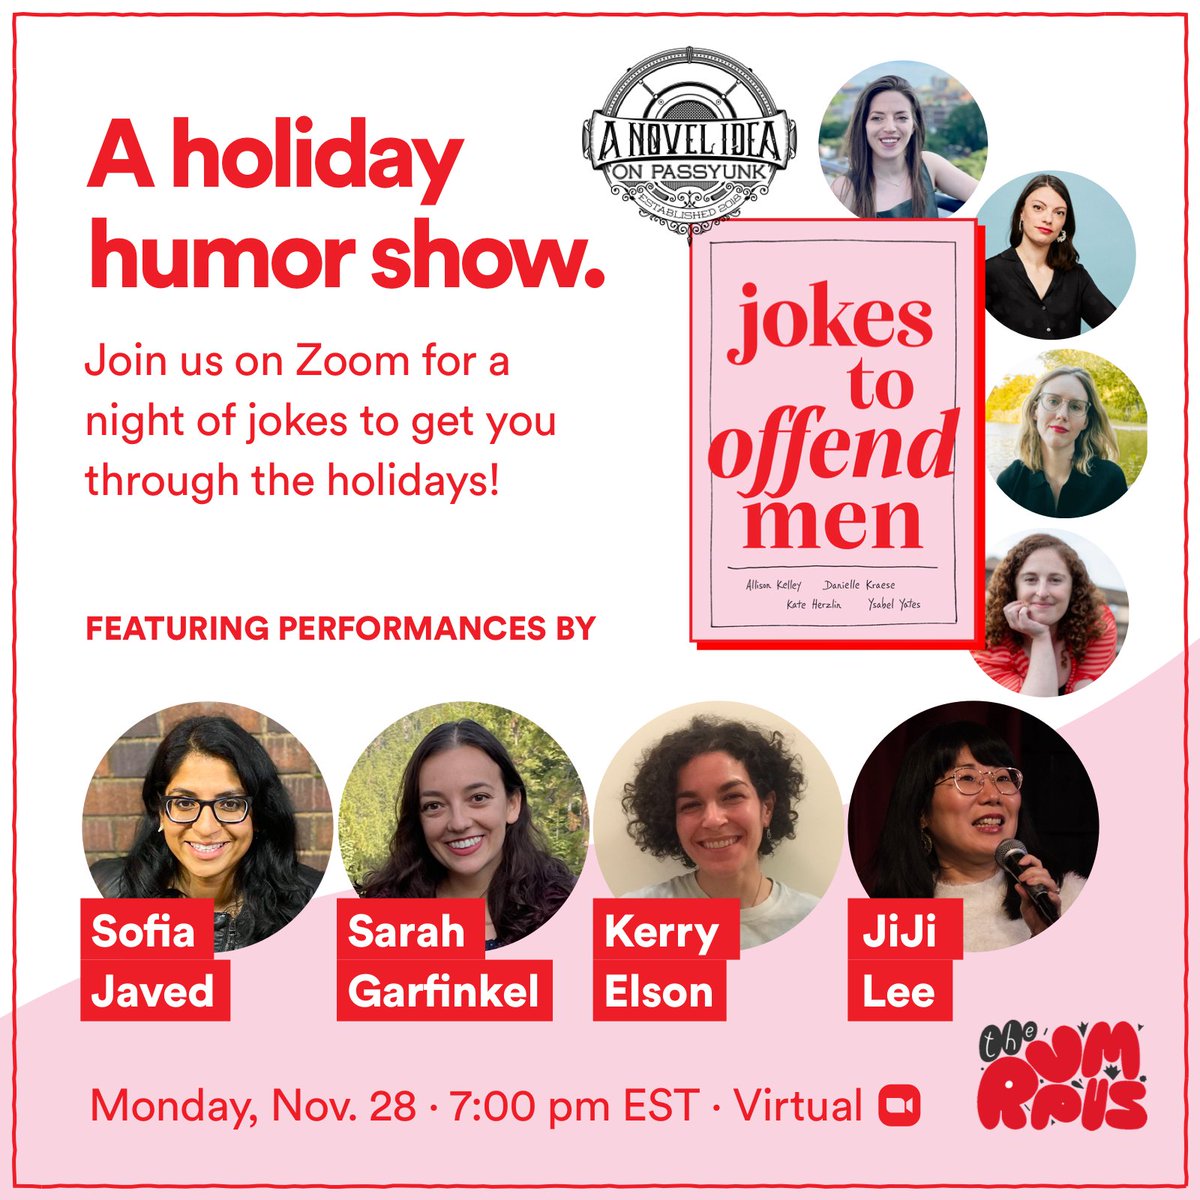 Join us Monday for some holiday humor!

#jokes #satire #womenincomedy #holidayhumor #jokestooffendmen